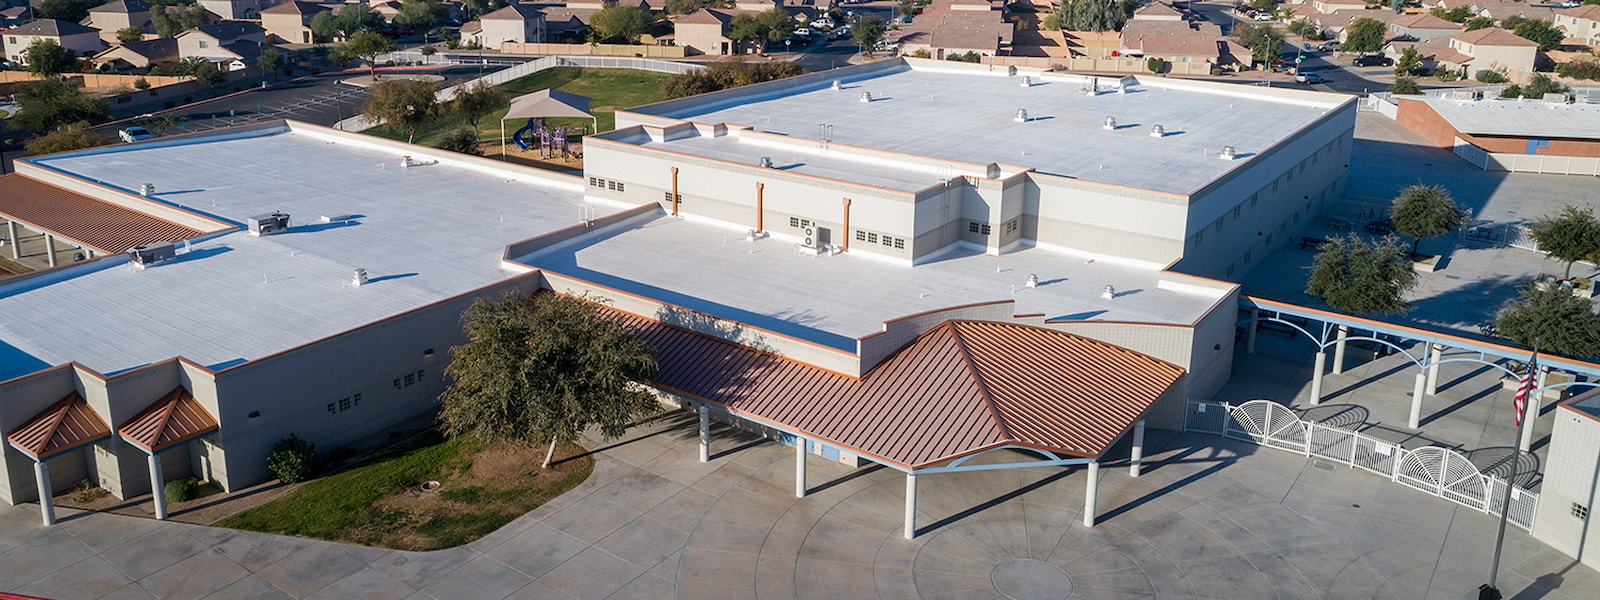 Aerial view of El Mirage Elementary